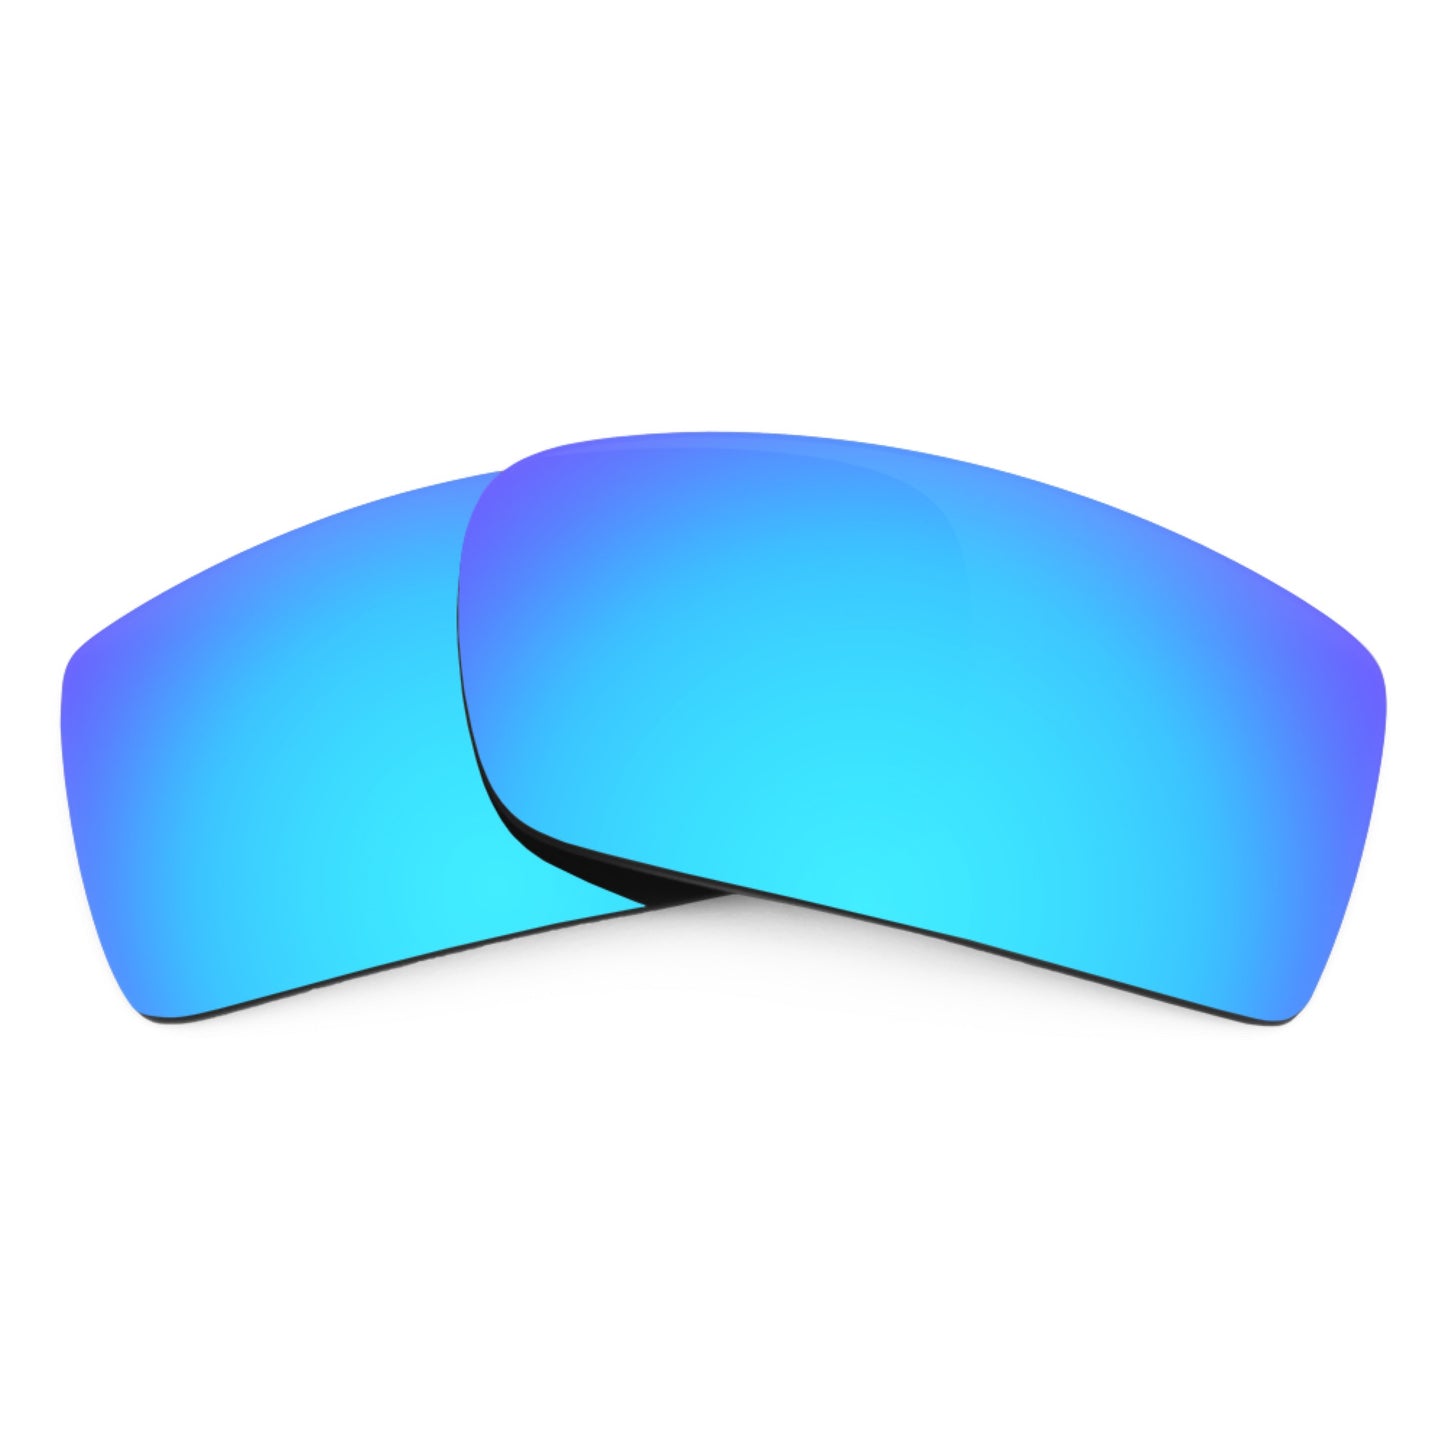 Revant replacement lenses for Prada VPR 02O Non-Polarized Ice Blue